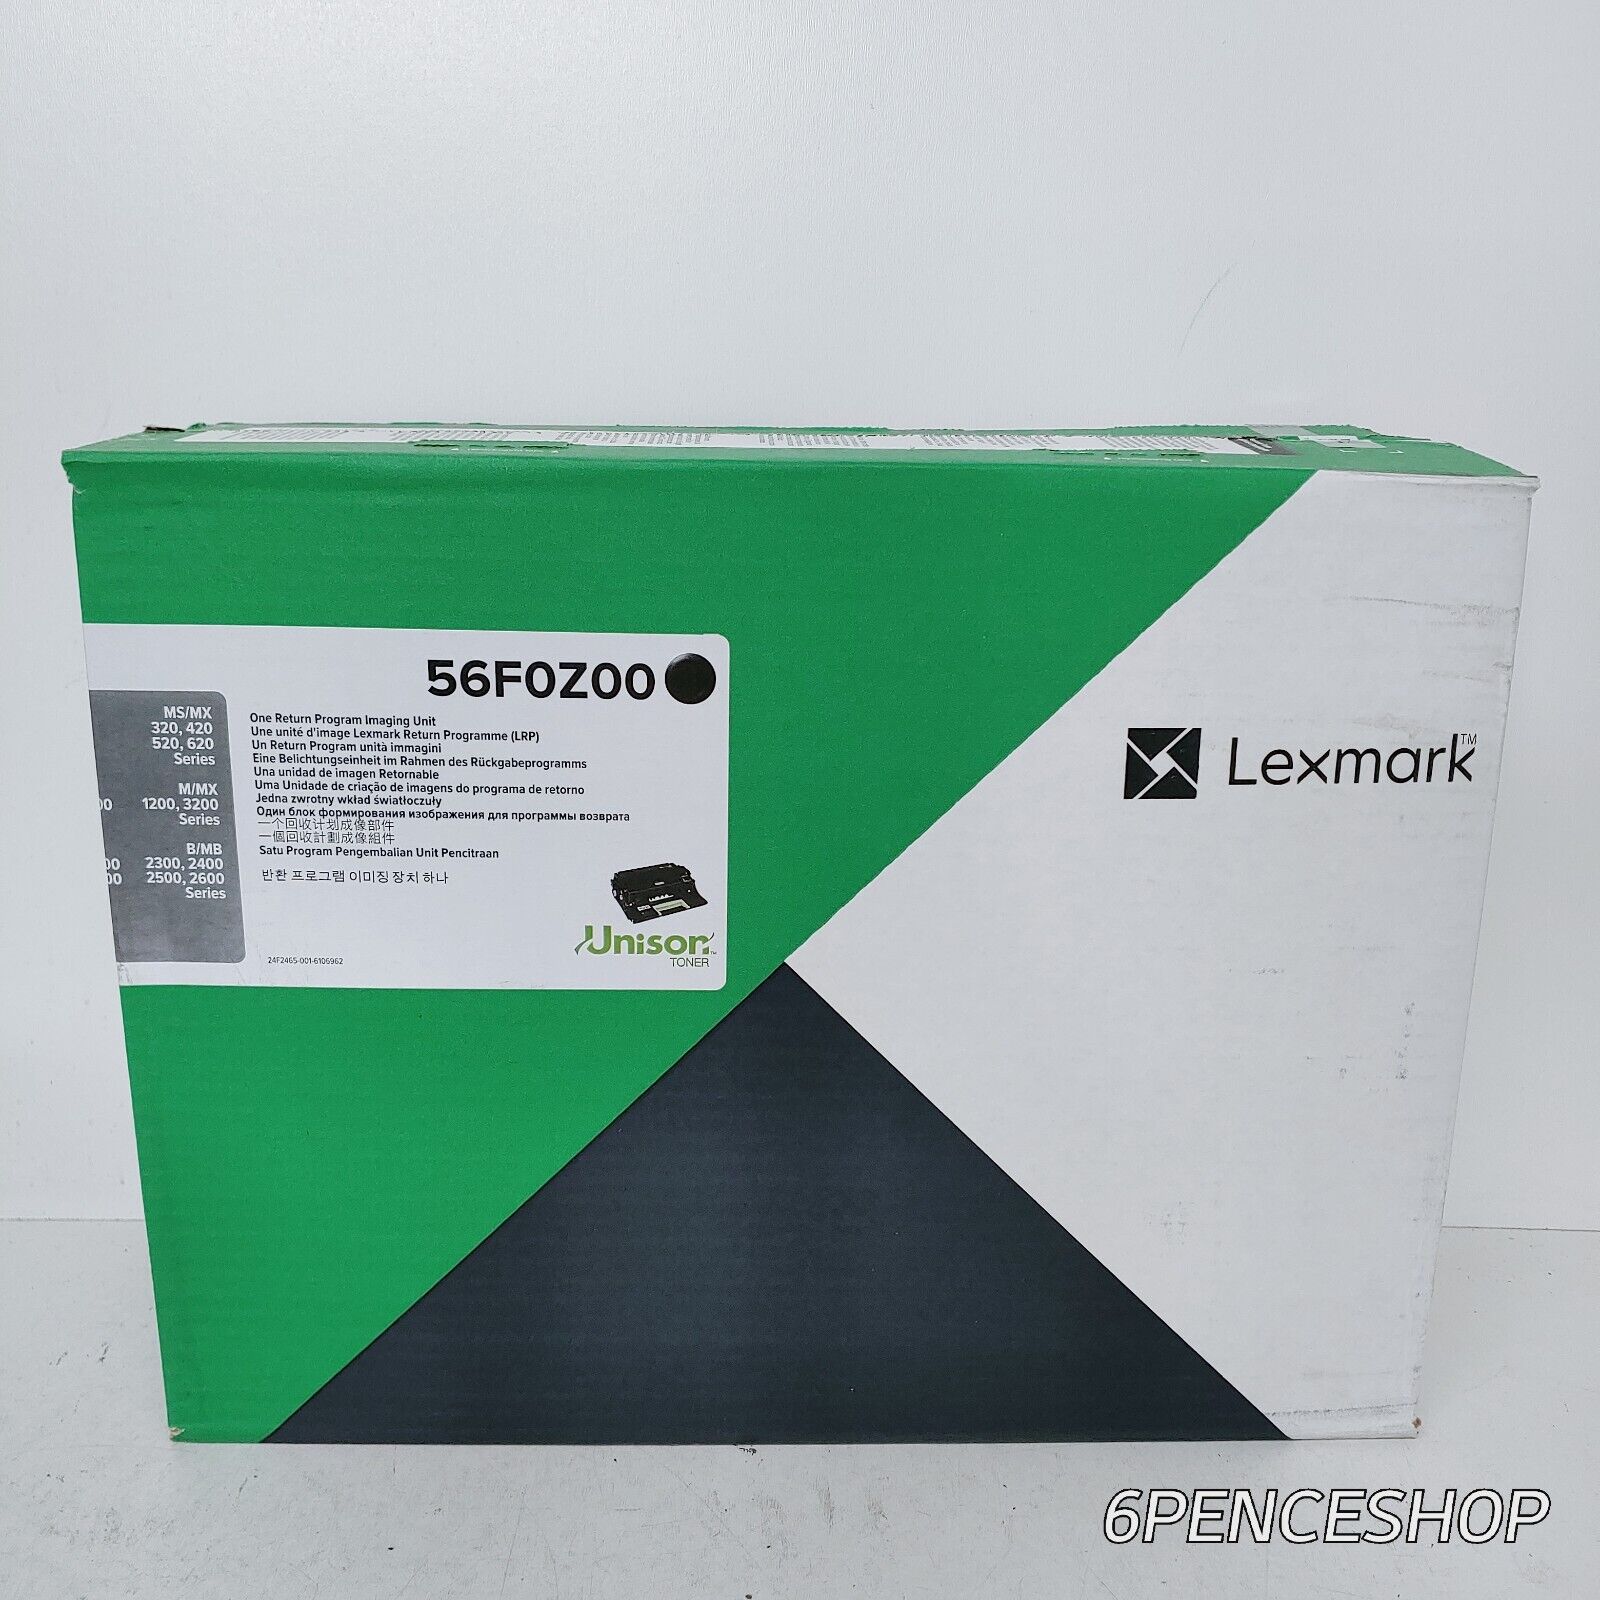 *Deformed Box* Lexmark 56F0Z00 Black Return Program Imaging Unit